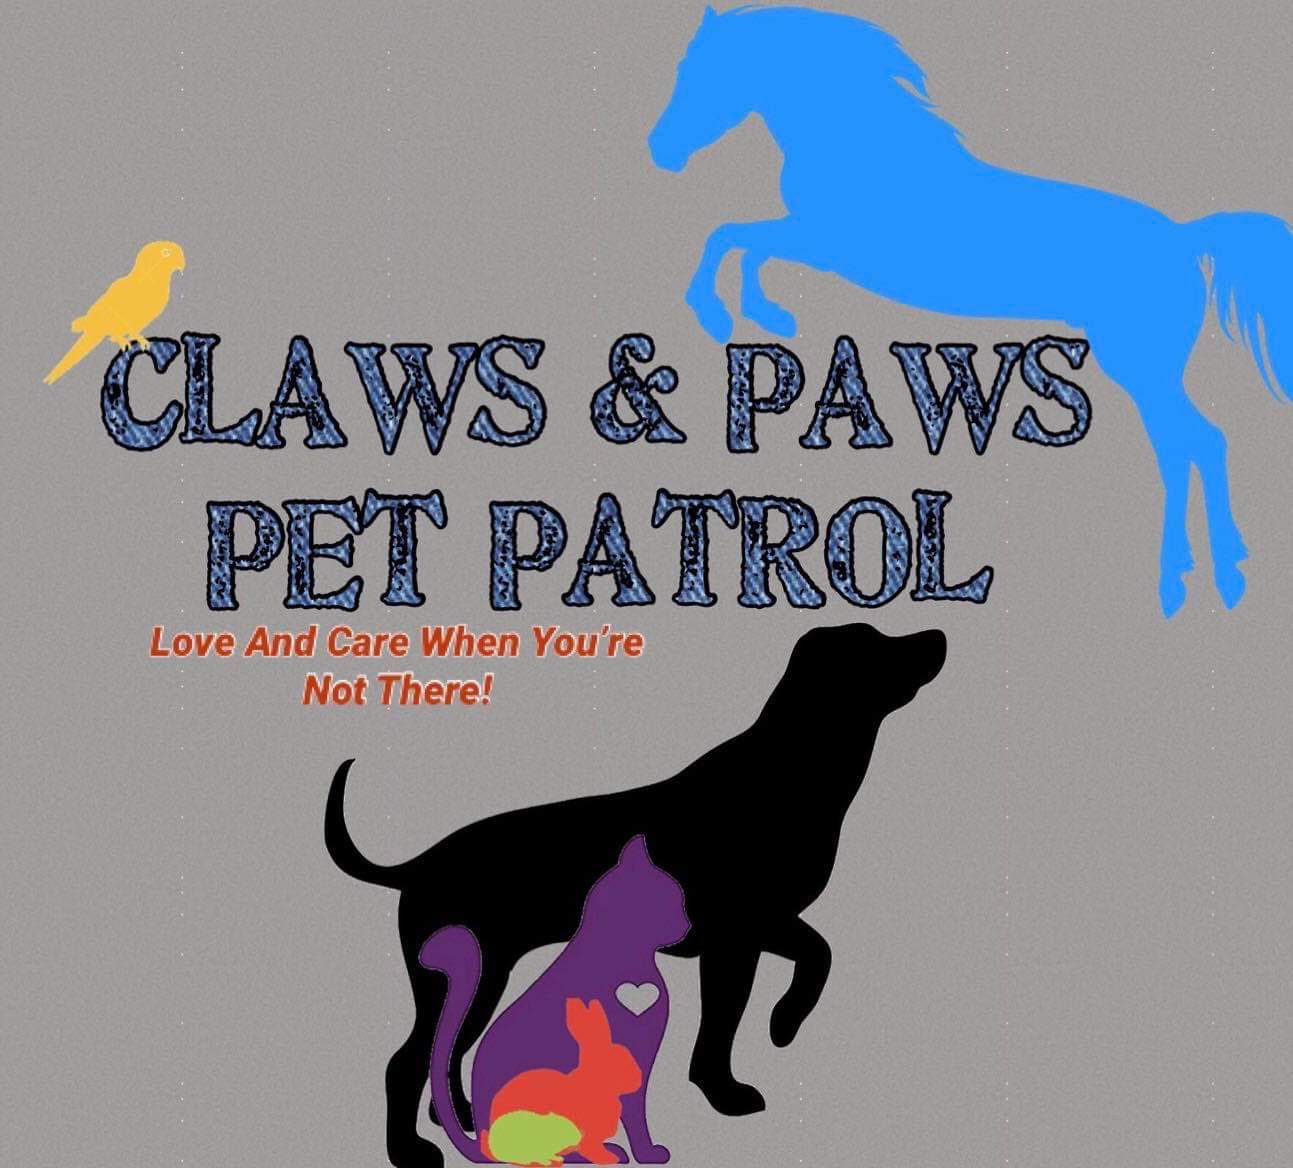 Claws & Paws Pet Patrol